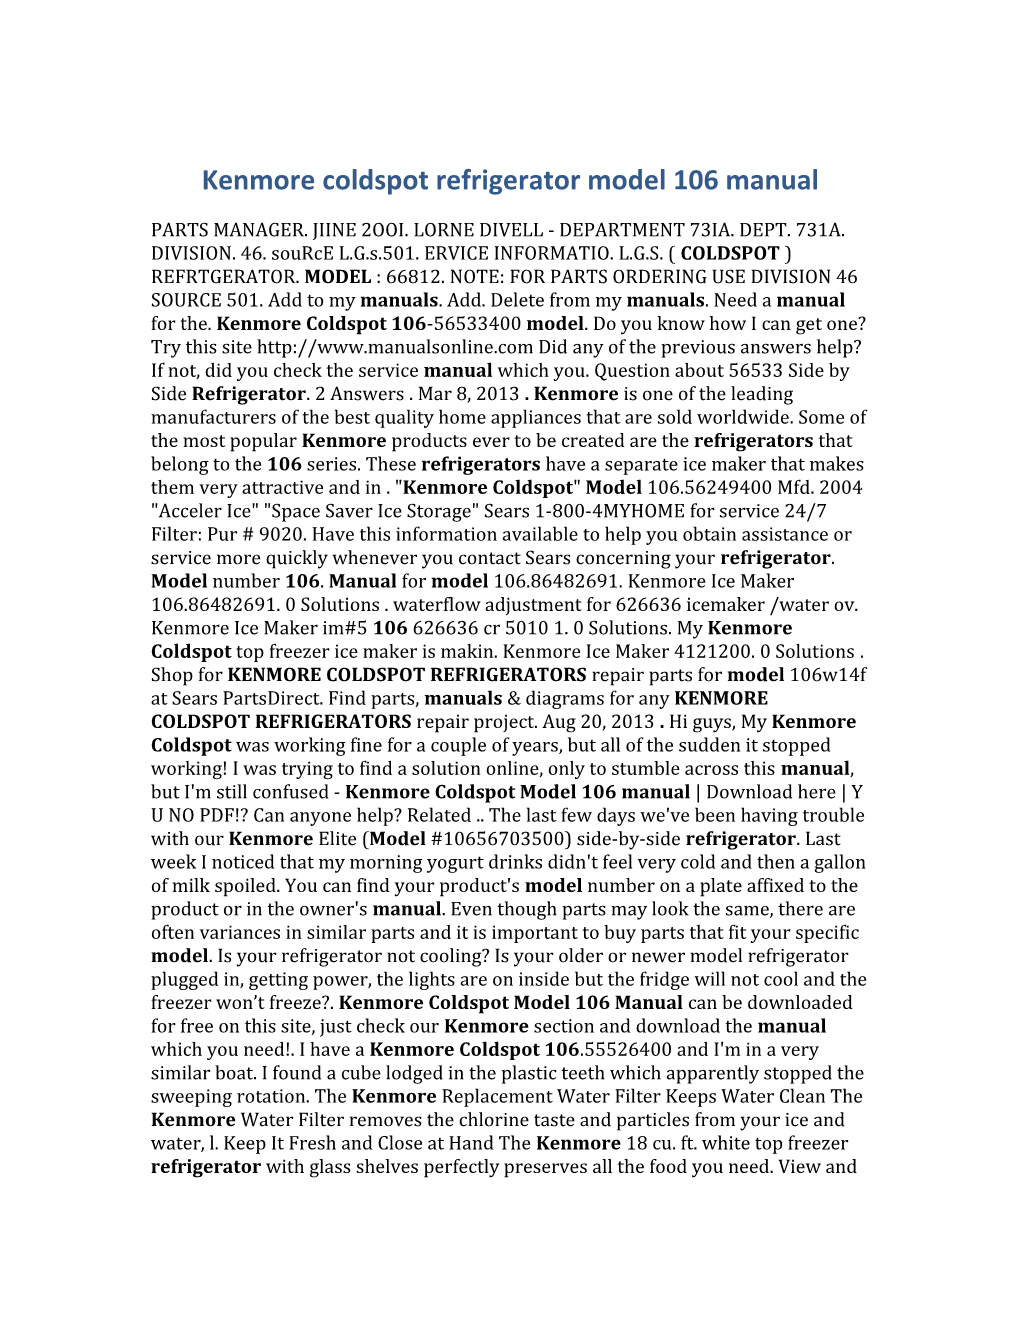 Kenmore Coldspot Refrigerator Model 106 Manual